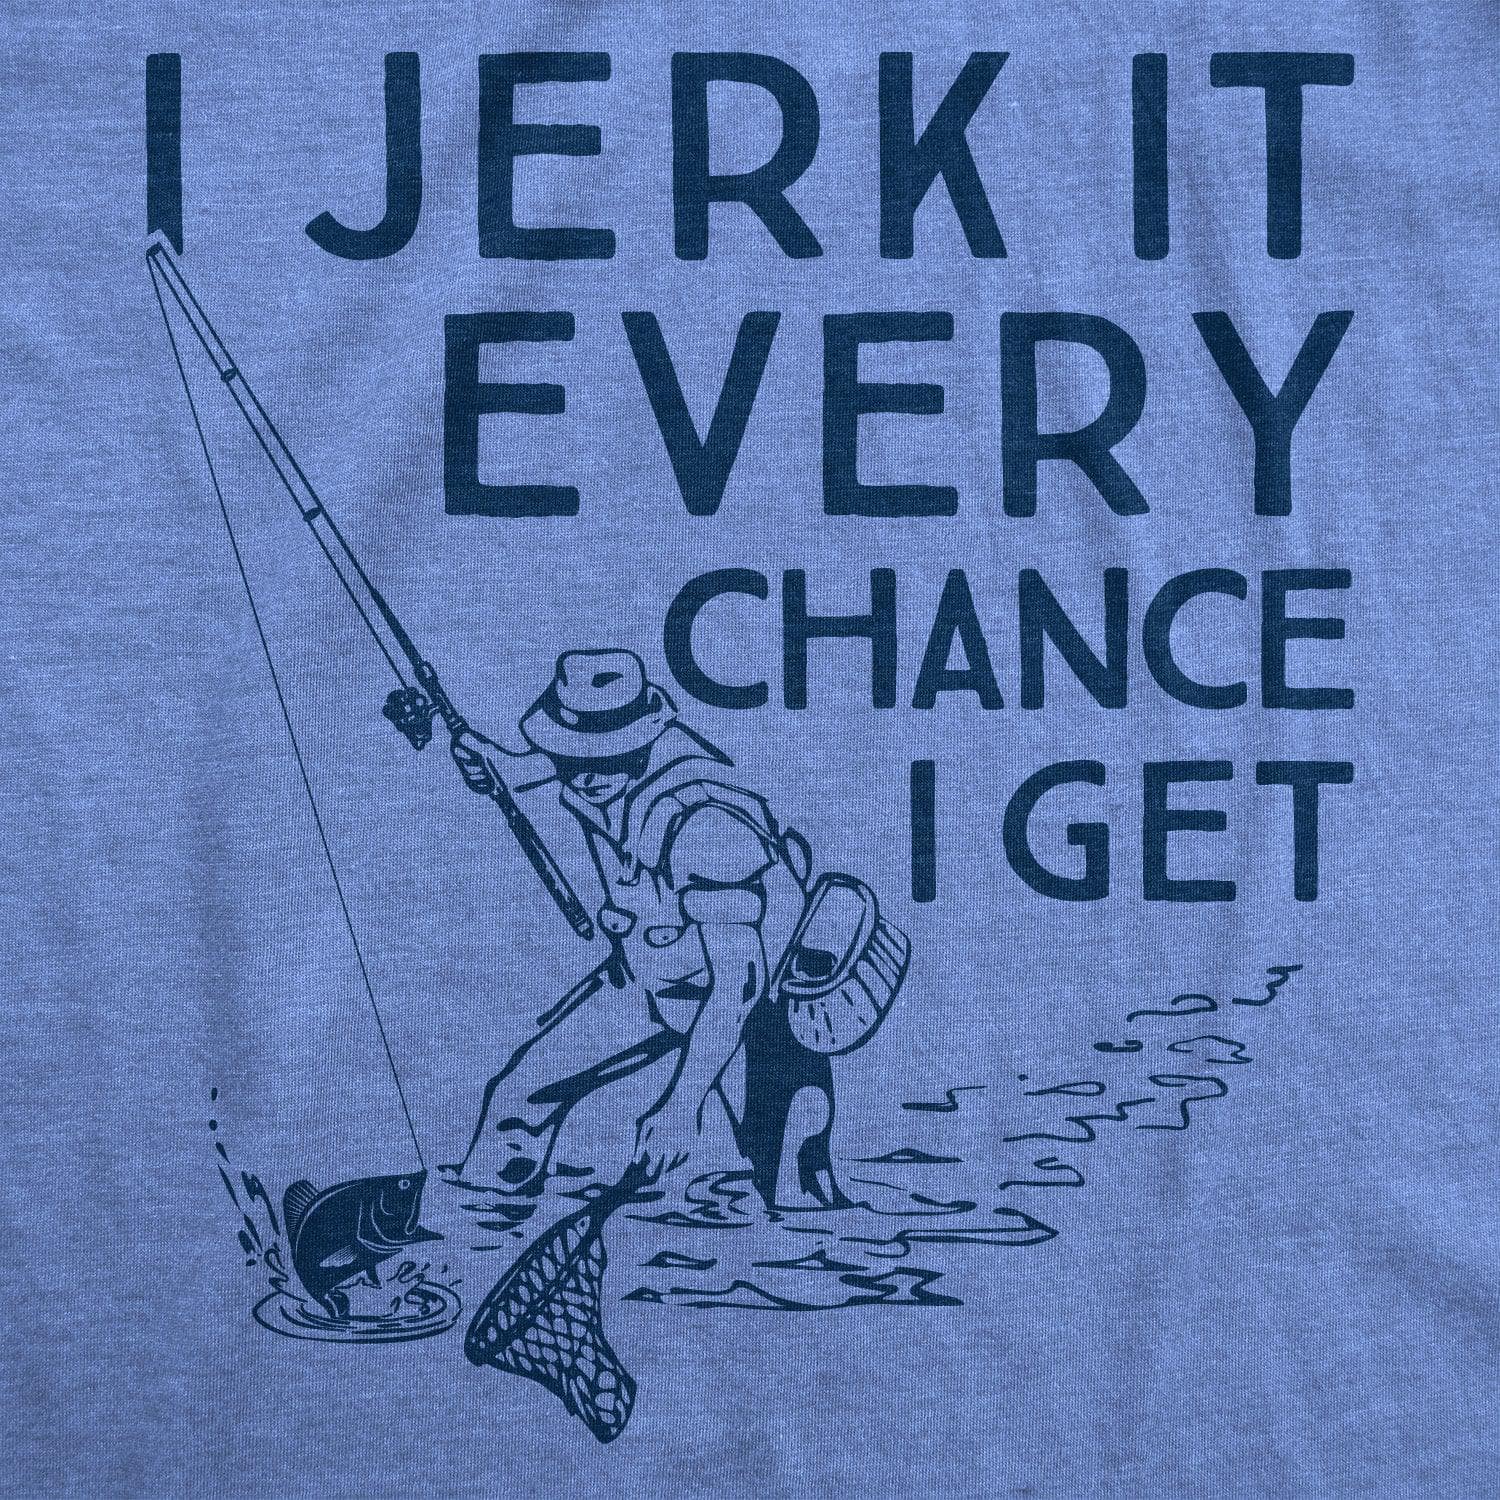 Fishing Shirt - Keep Calm And Go For Fishing Shirt - Outdoor T Shirt - Dad  Shirt - Papa Fisherman Gifts - Outdoorsman Shirt Tshirt Funny Sarcastic  Humor Comical Tee